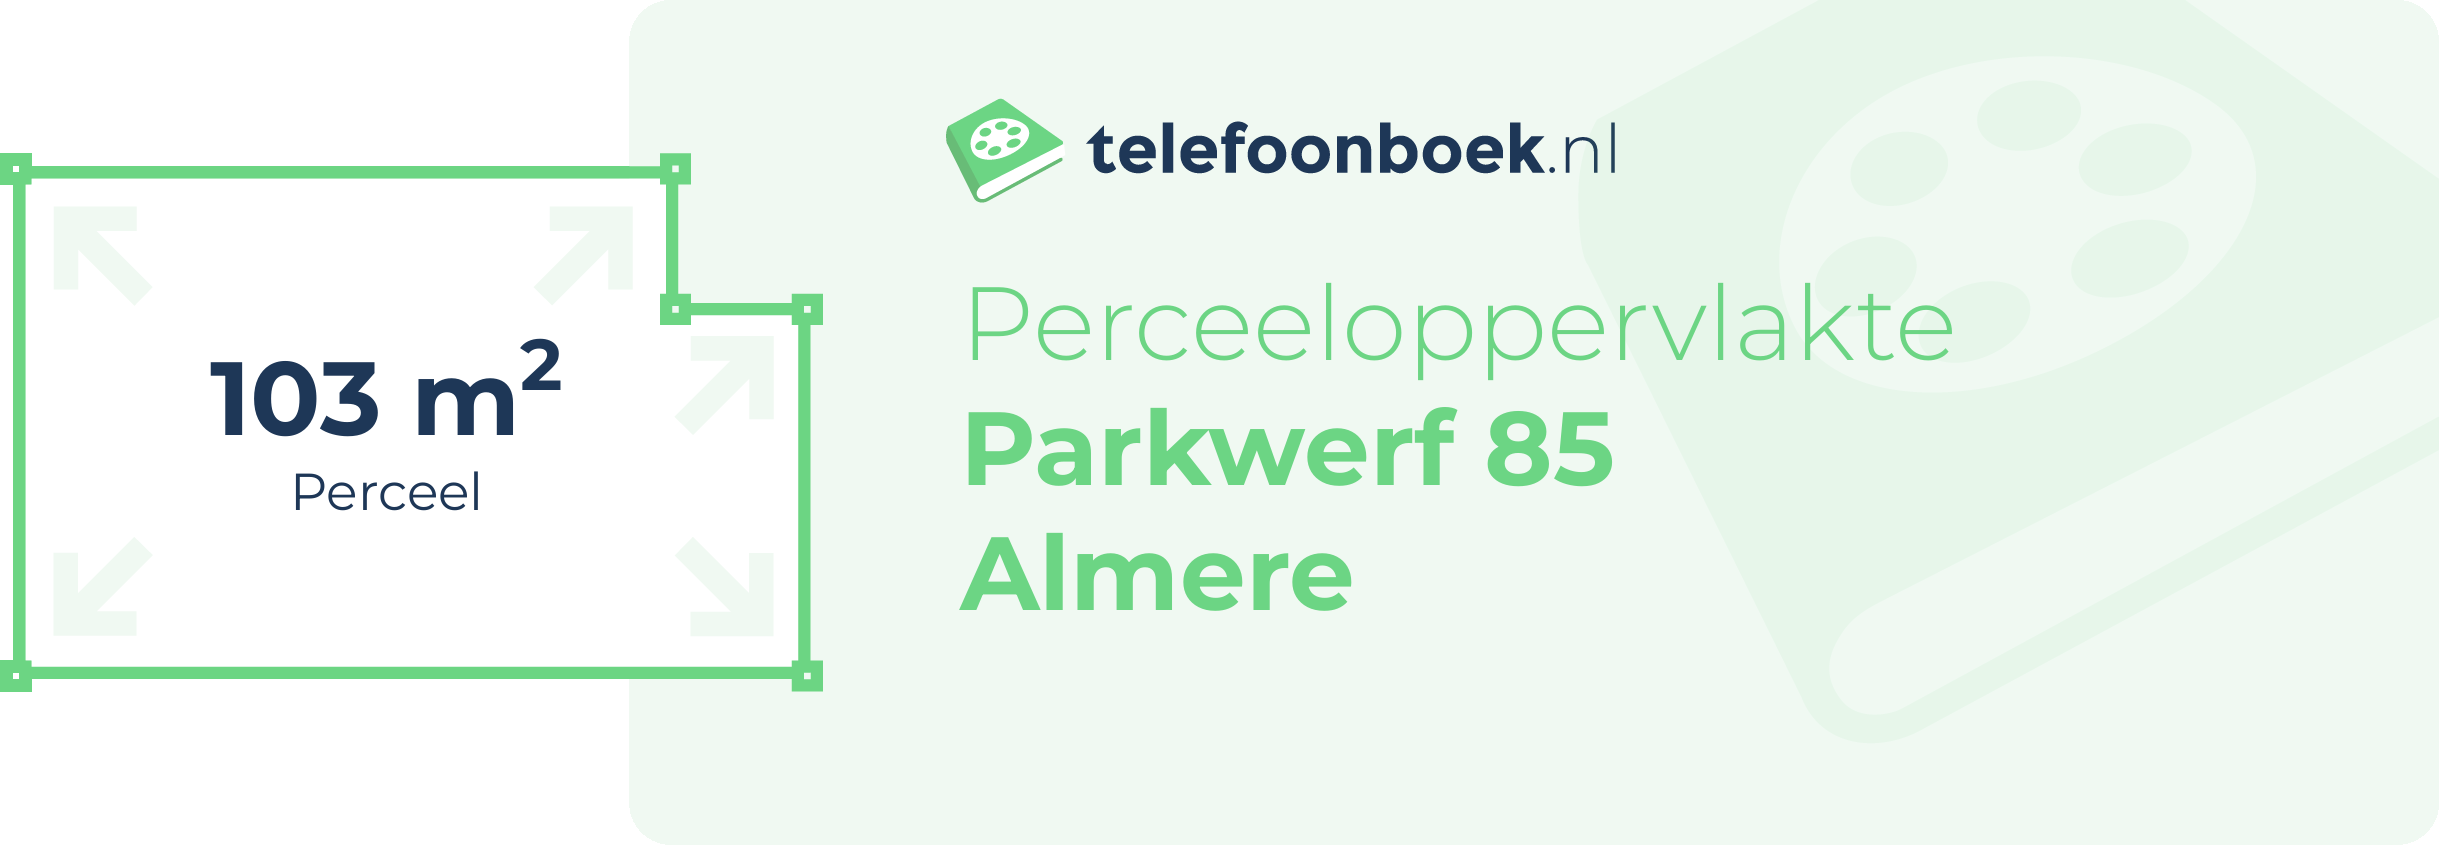 Perceeloppervlakte Parkwerf 85 Almere